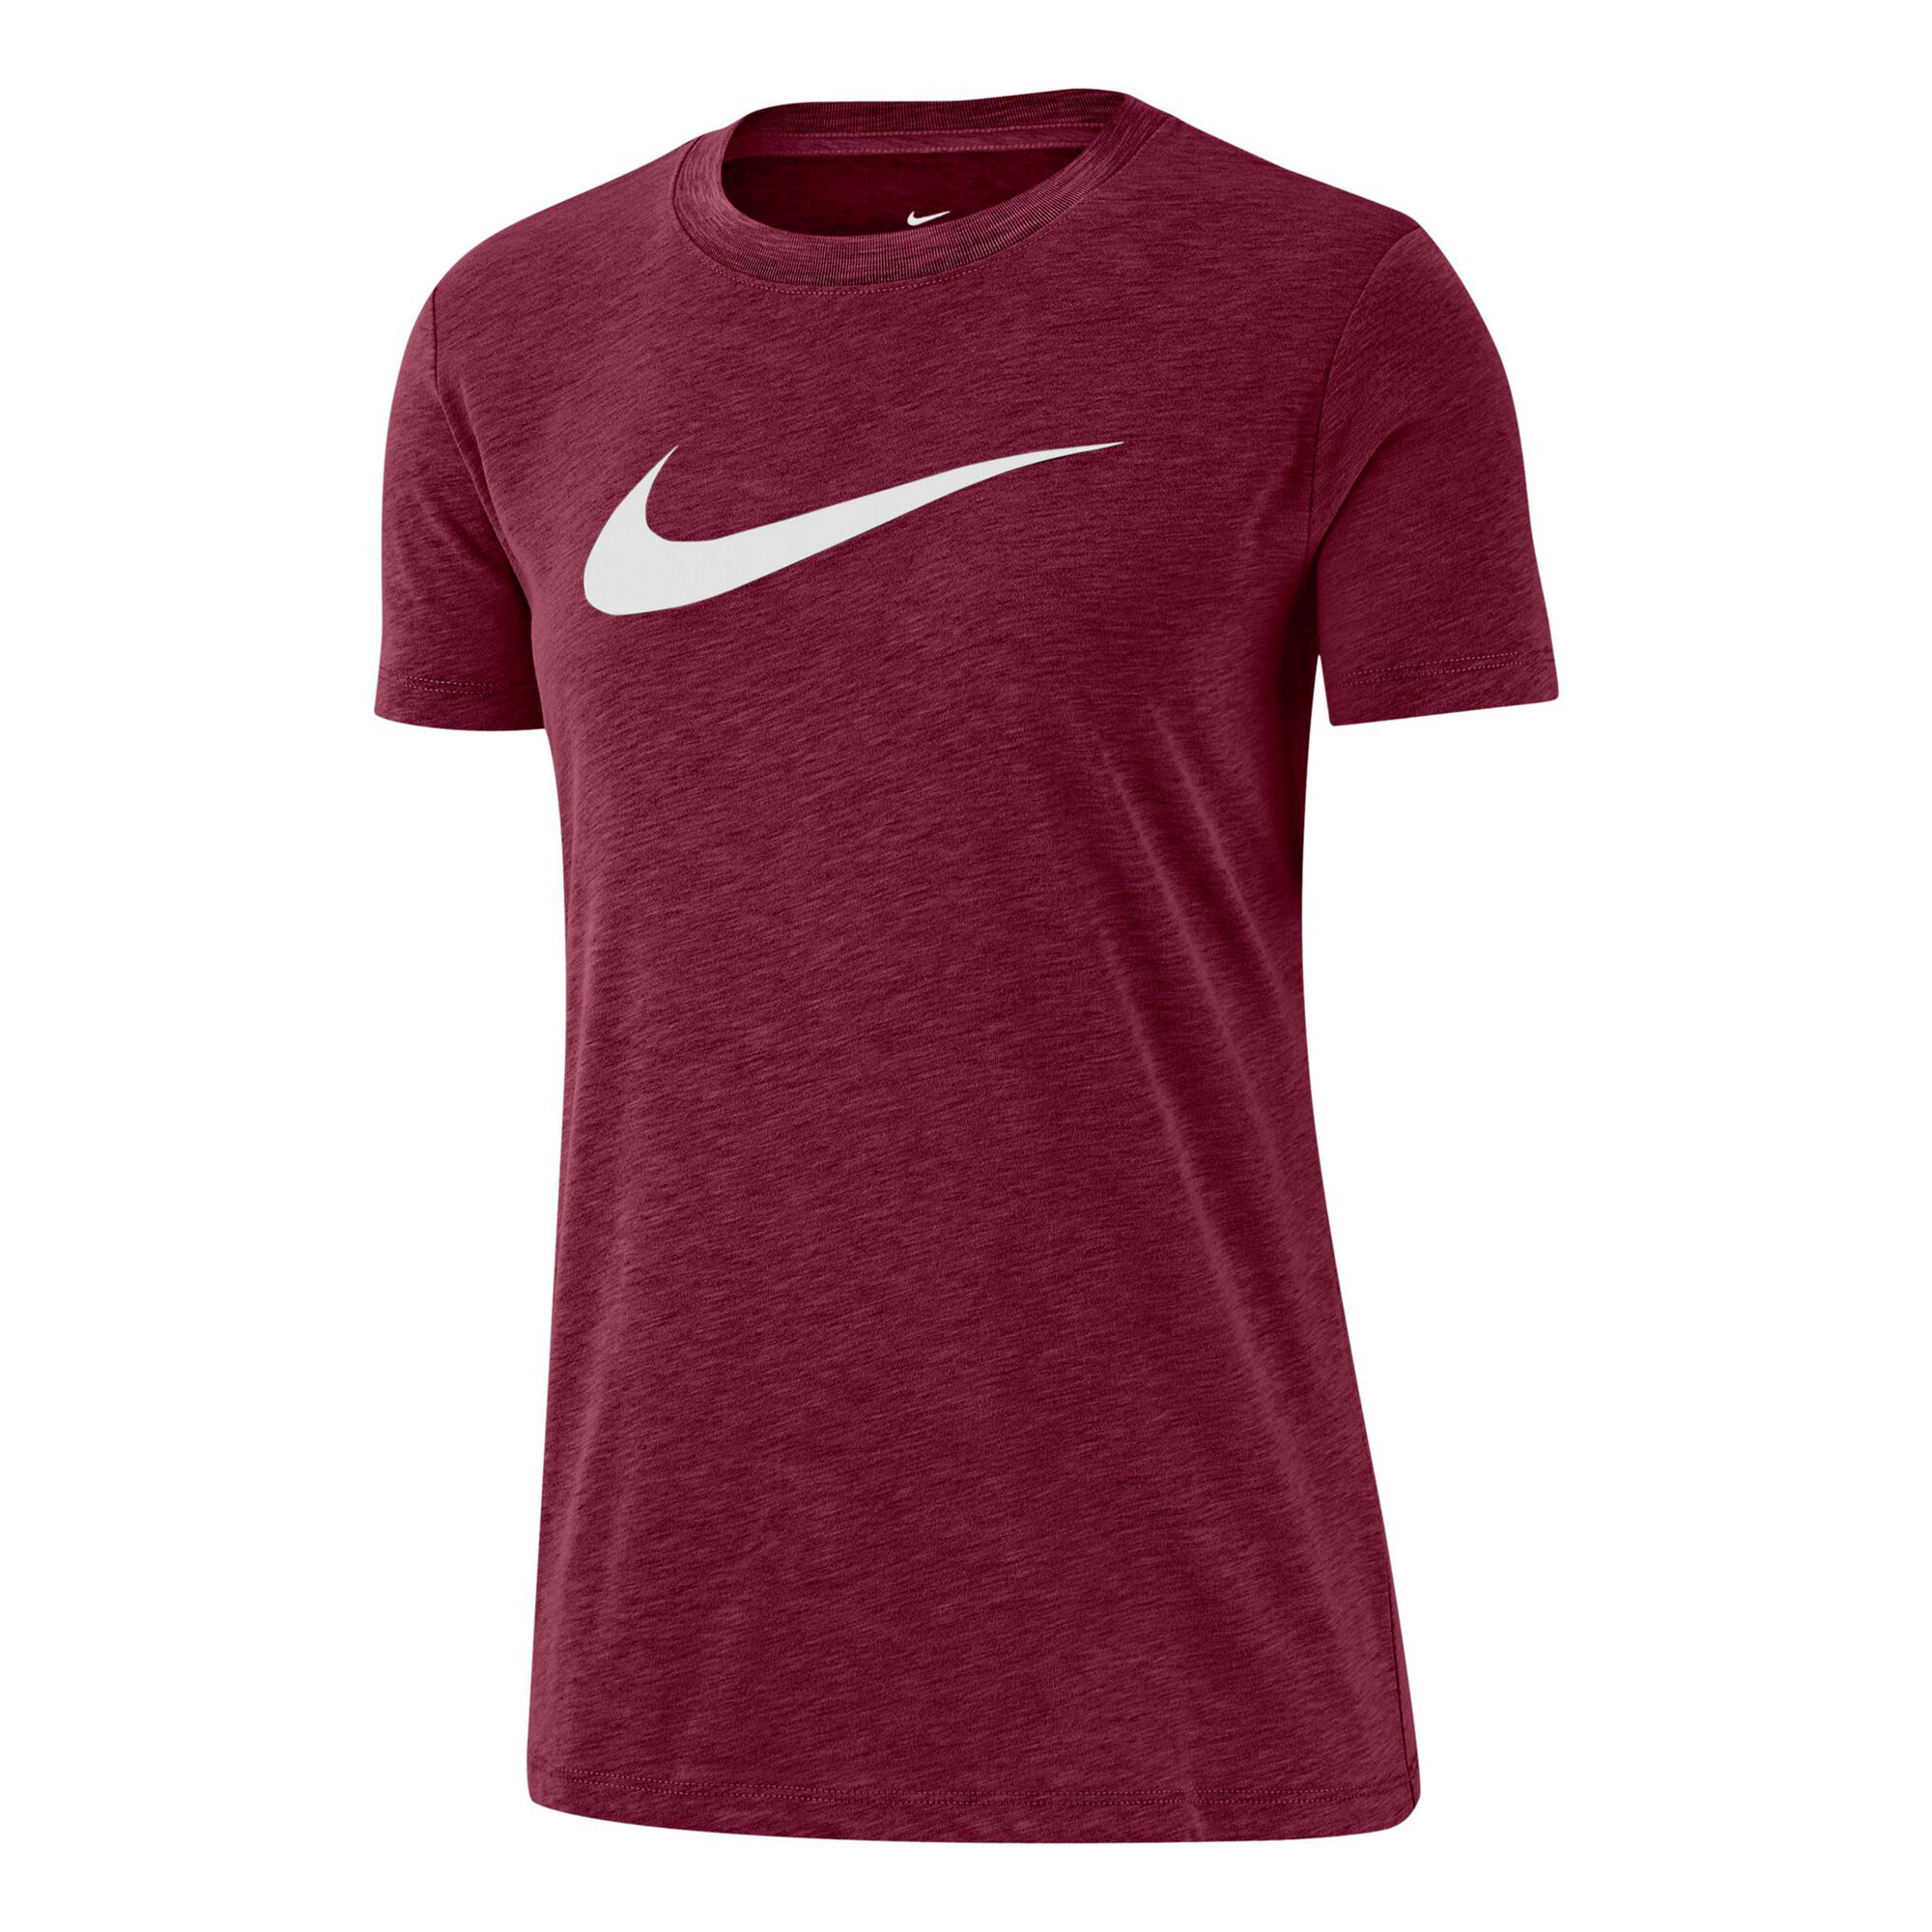 Buy Nike Dri-Fit T-Shirt Women Dark Red, White online | Tennis Point UK